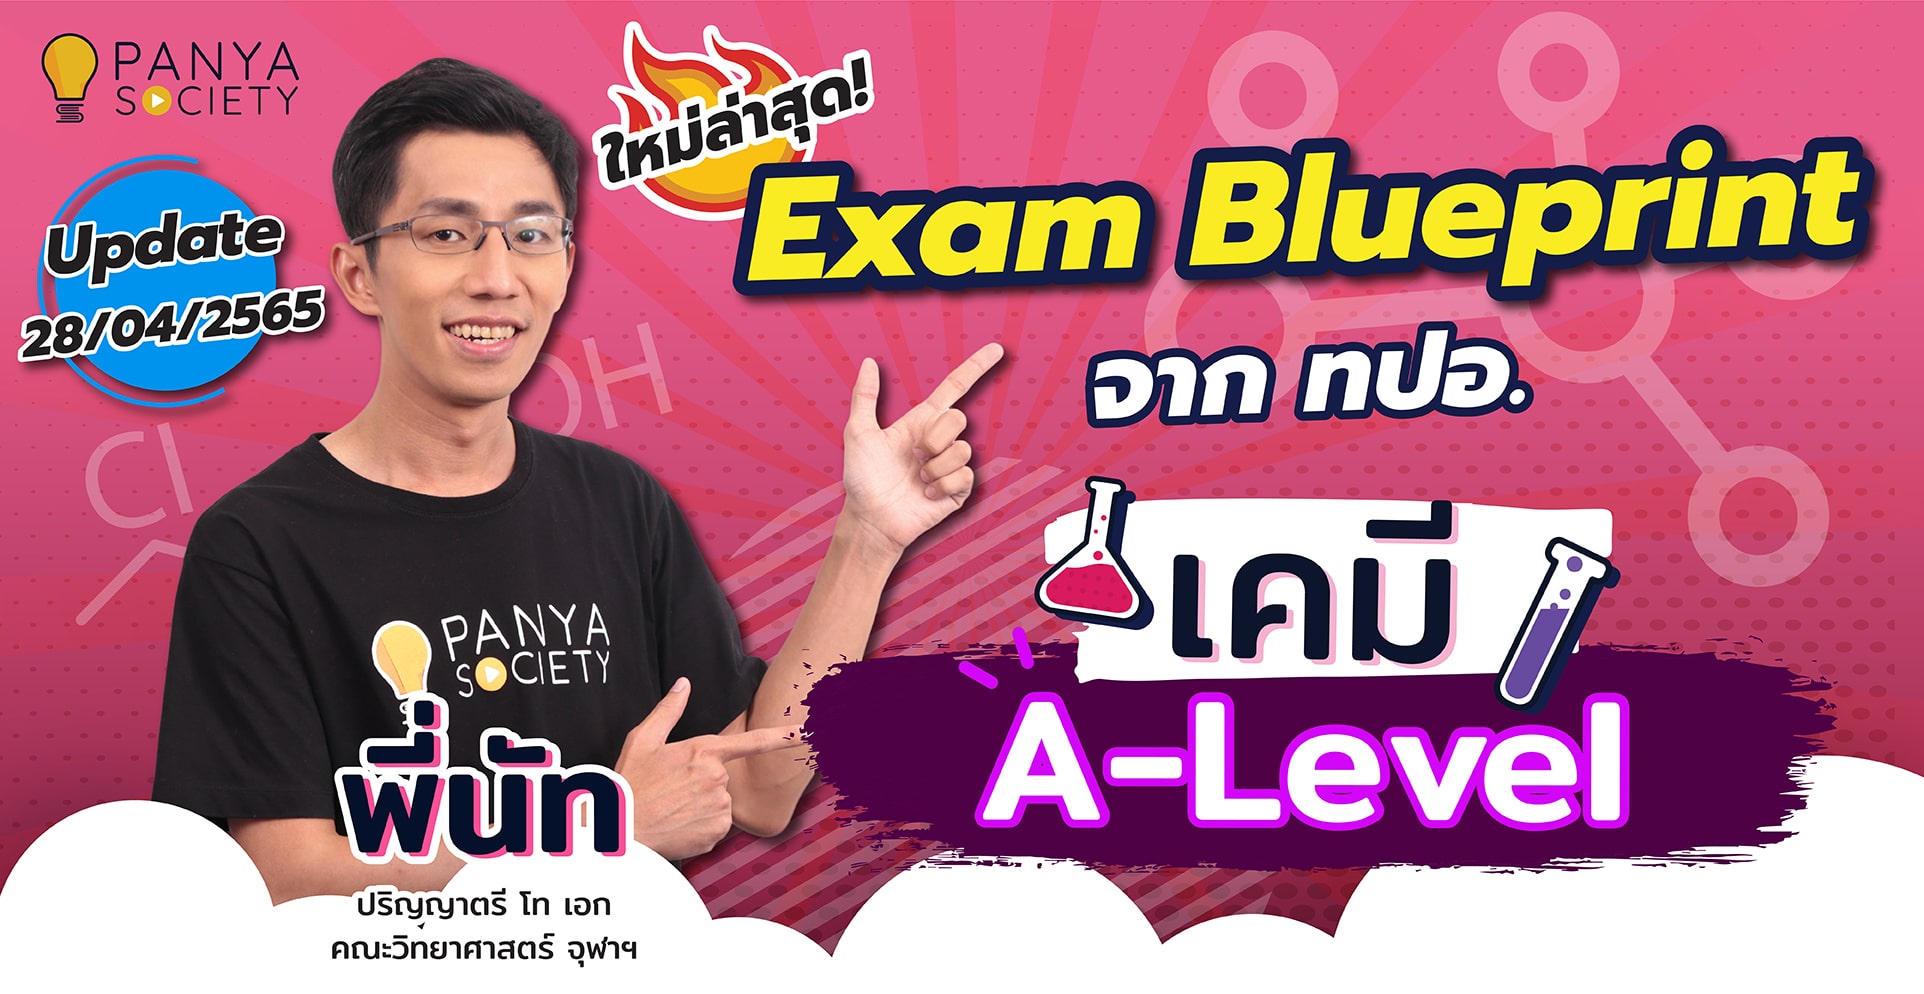 Exam Blueprint จาก ทปอ. เคมี A-Level